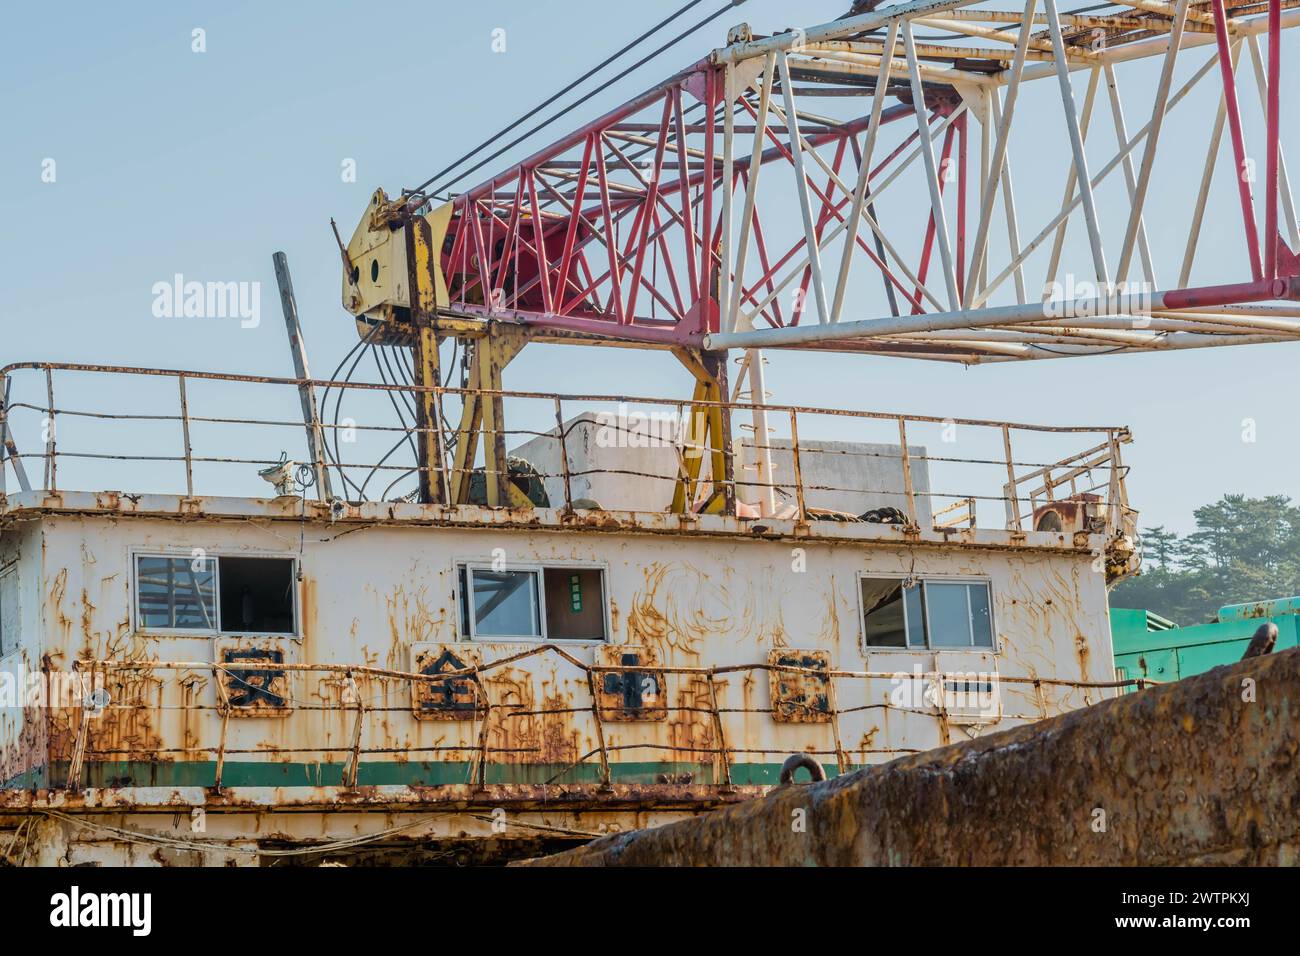 Una gru arrugginita su una nave decrepita parla di degrado industriale, a Sinjin-do, Corea del Sud, Asia Foto Stock